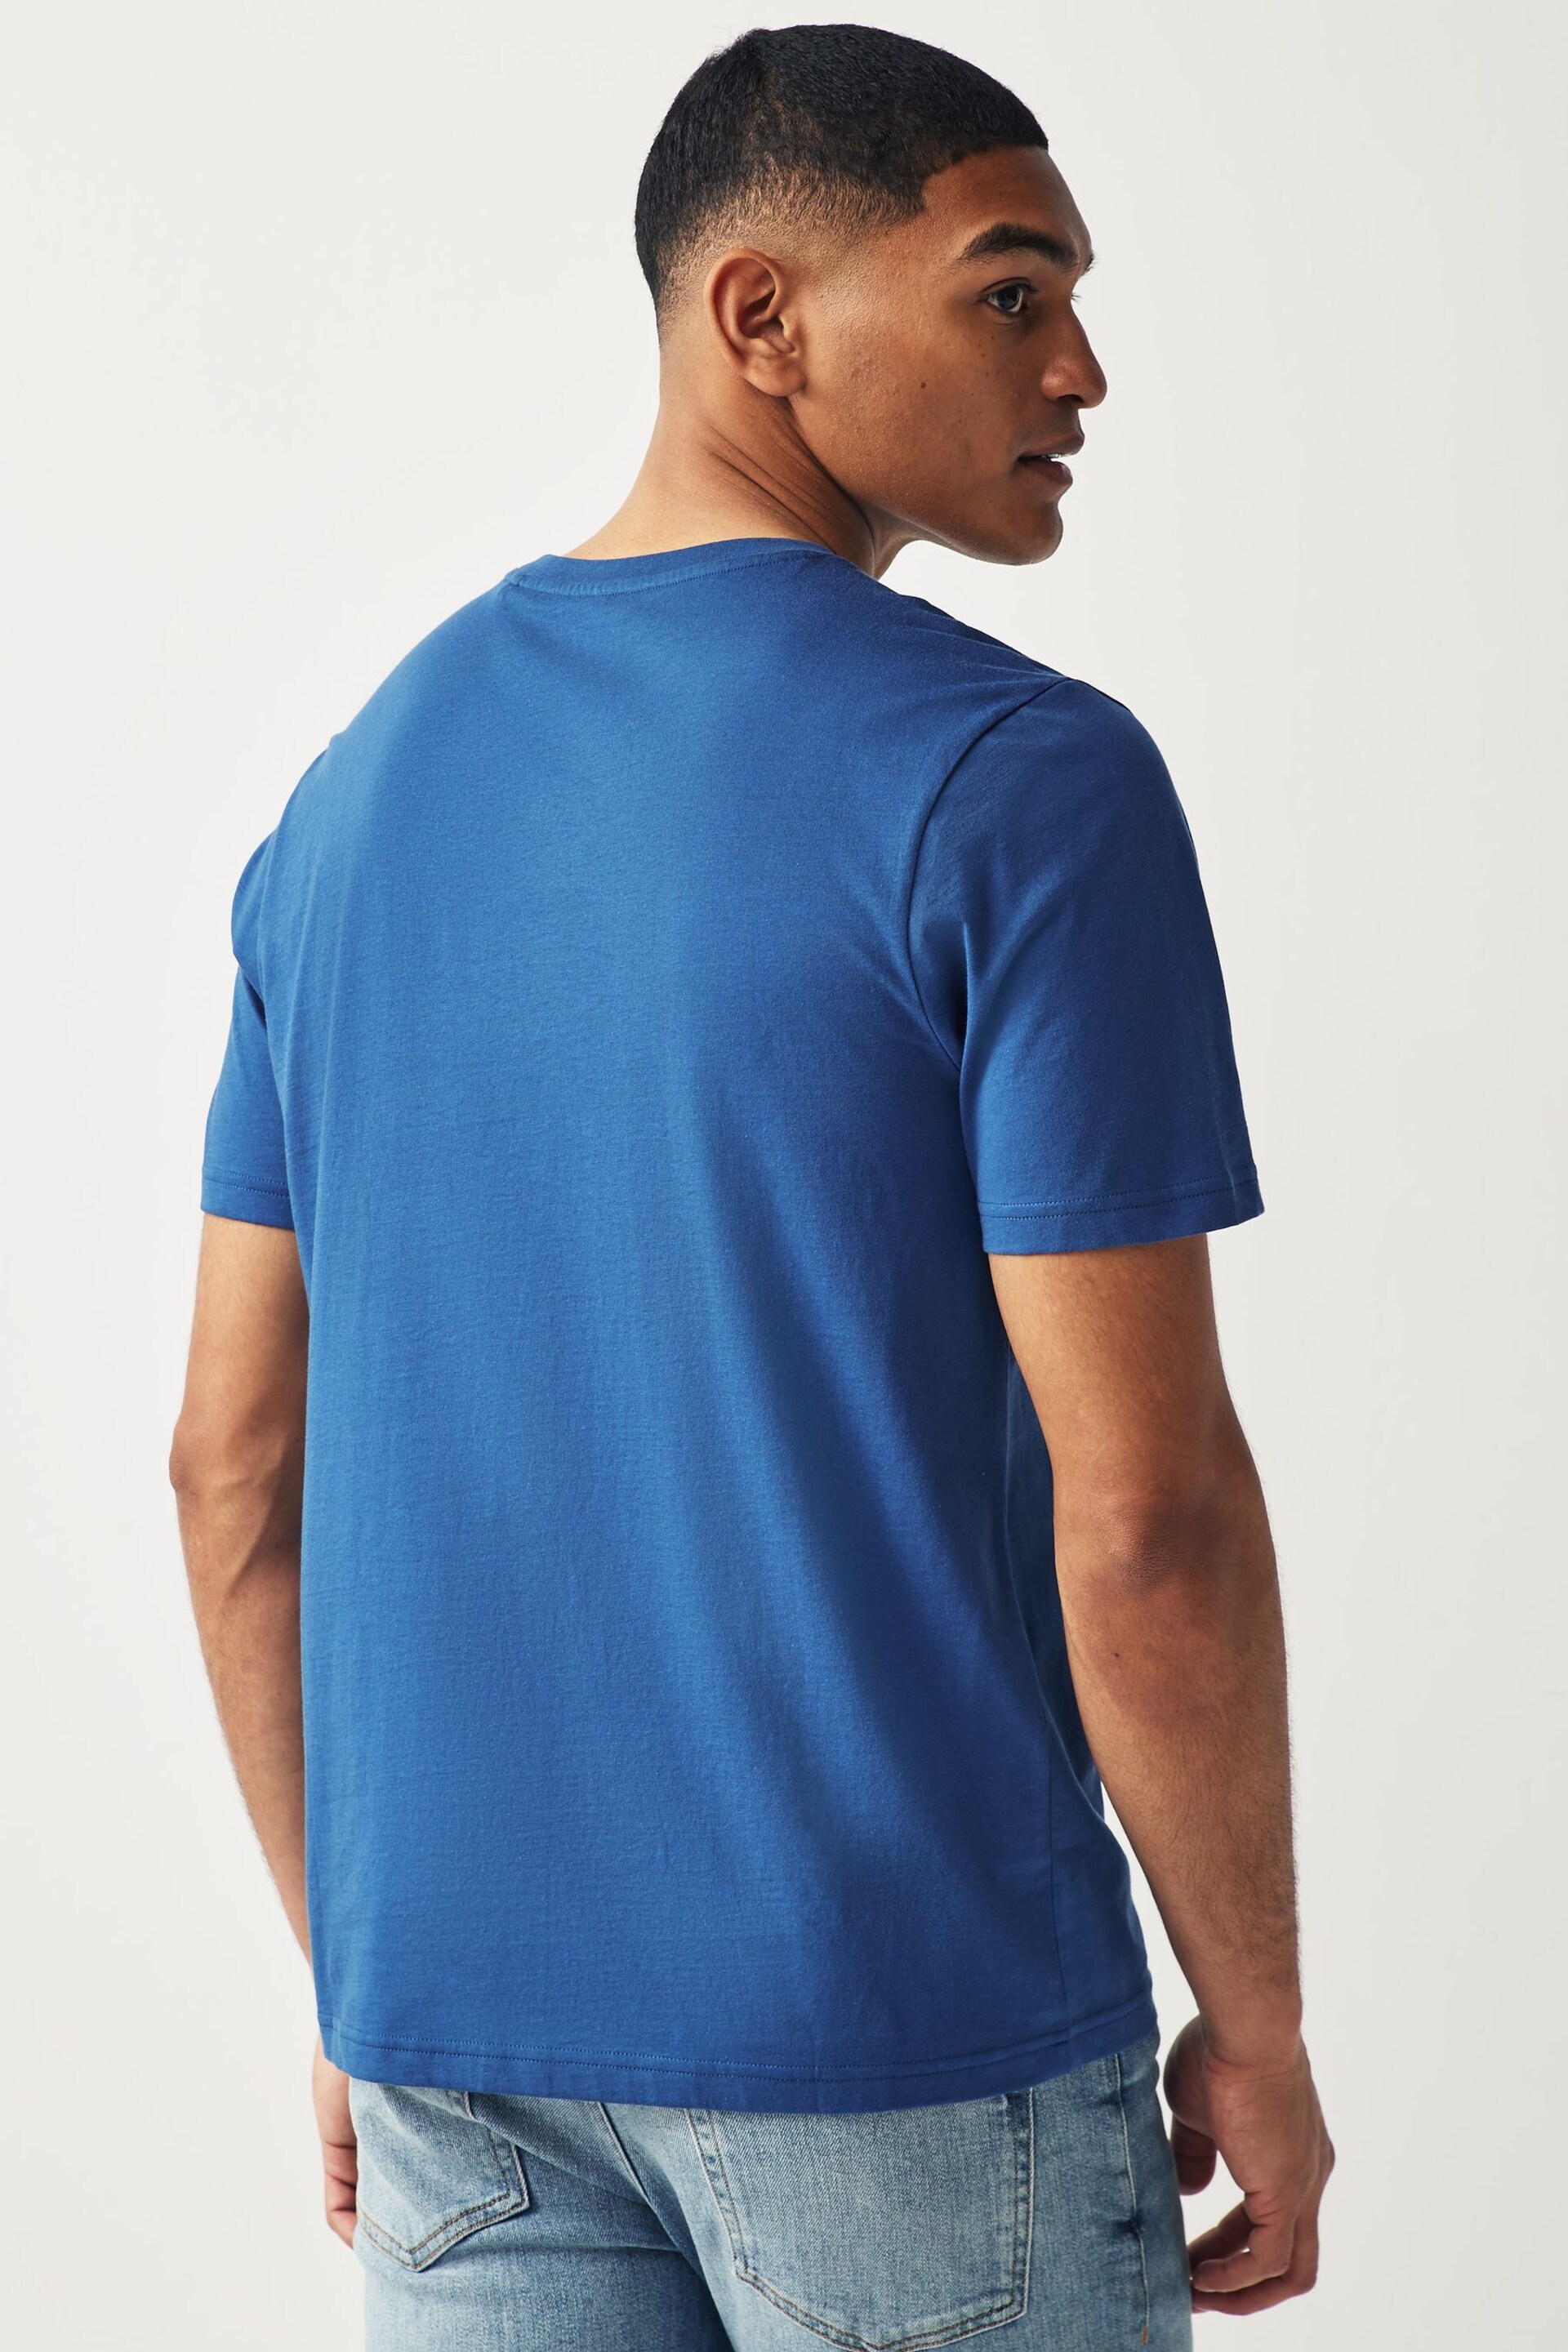 Blue Bright Regular Fit Essential Crew Neck T-Shirt - Image 3 of 7